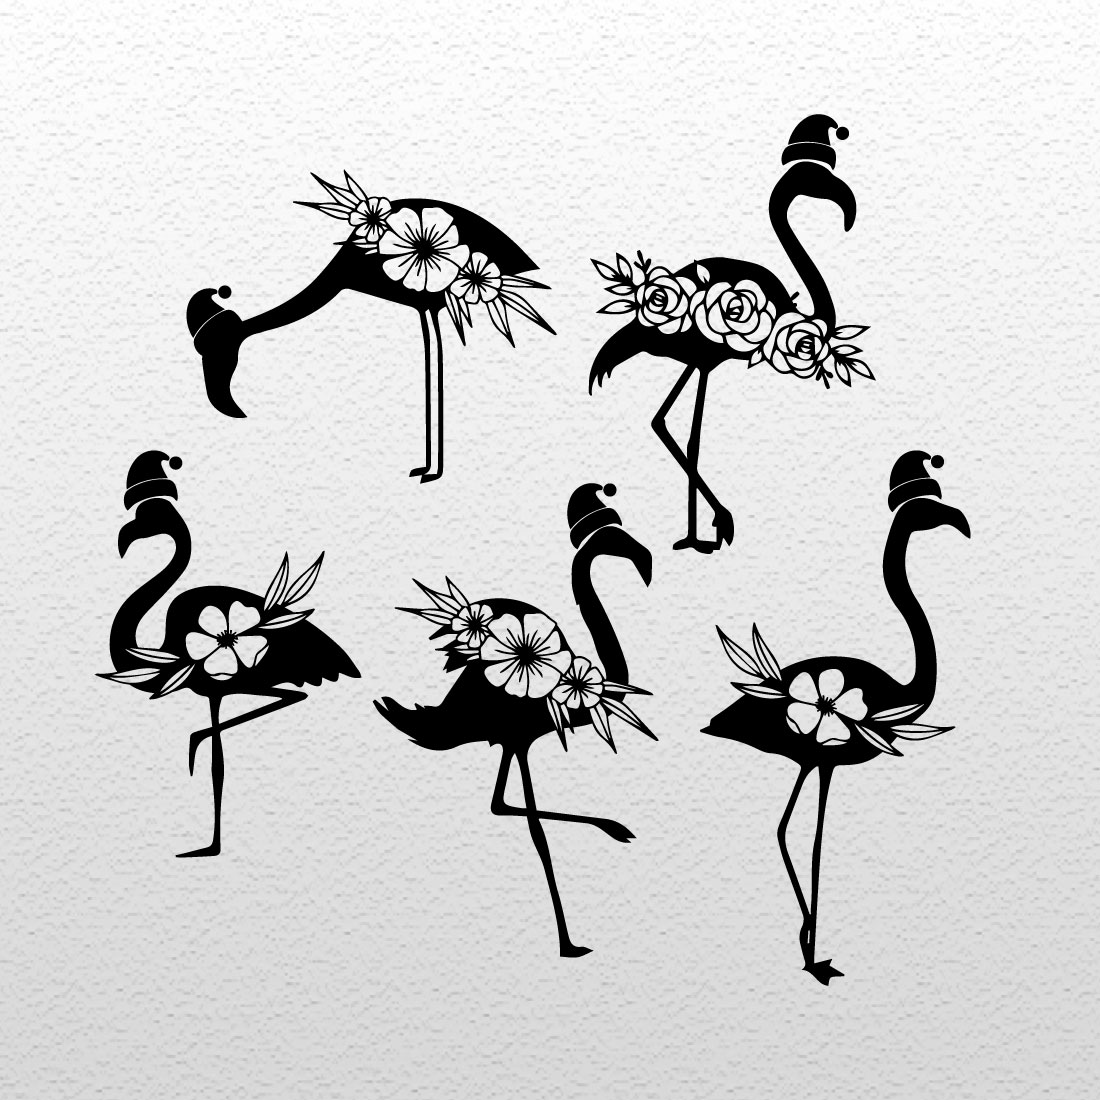 Collection of black wonderful flamingo images